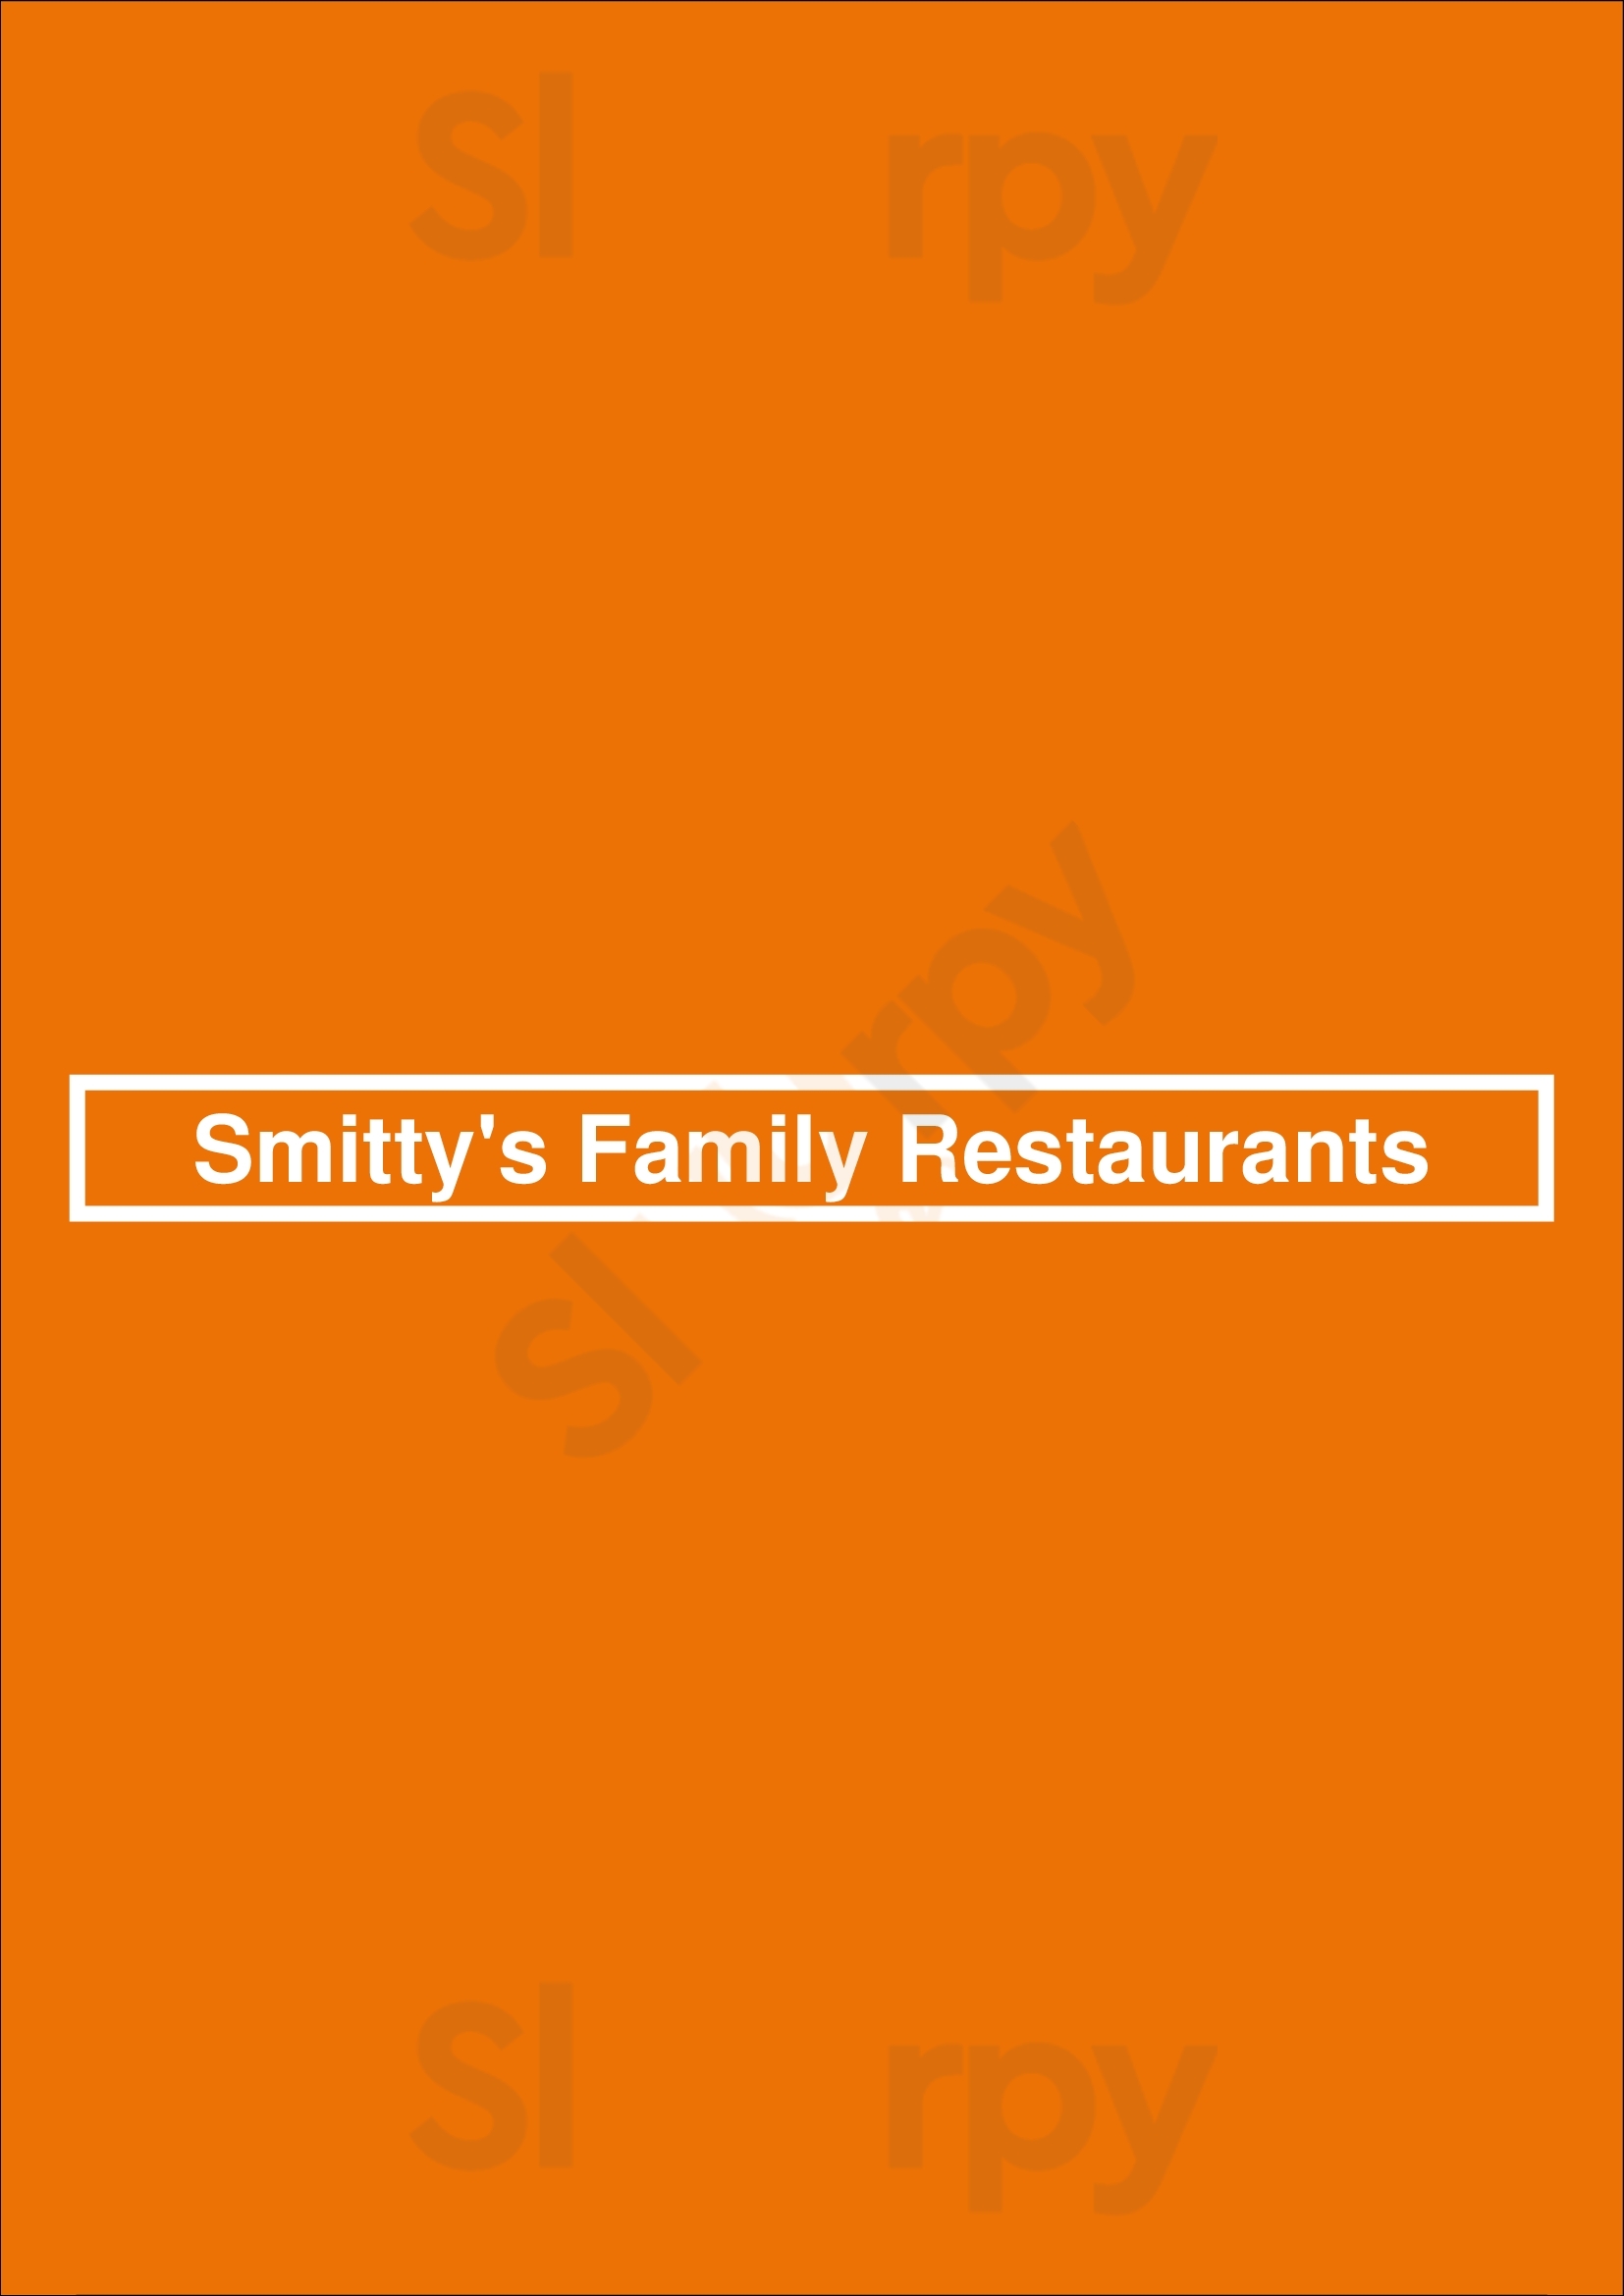 Smitty's Family Restaurants Edmonton Menu - 1